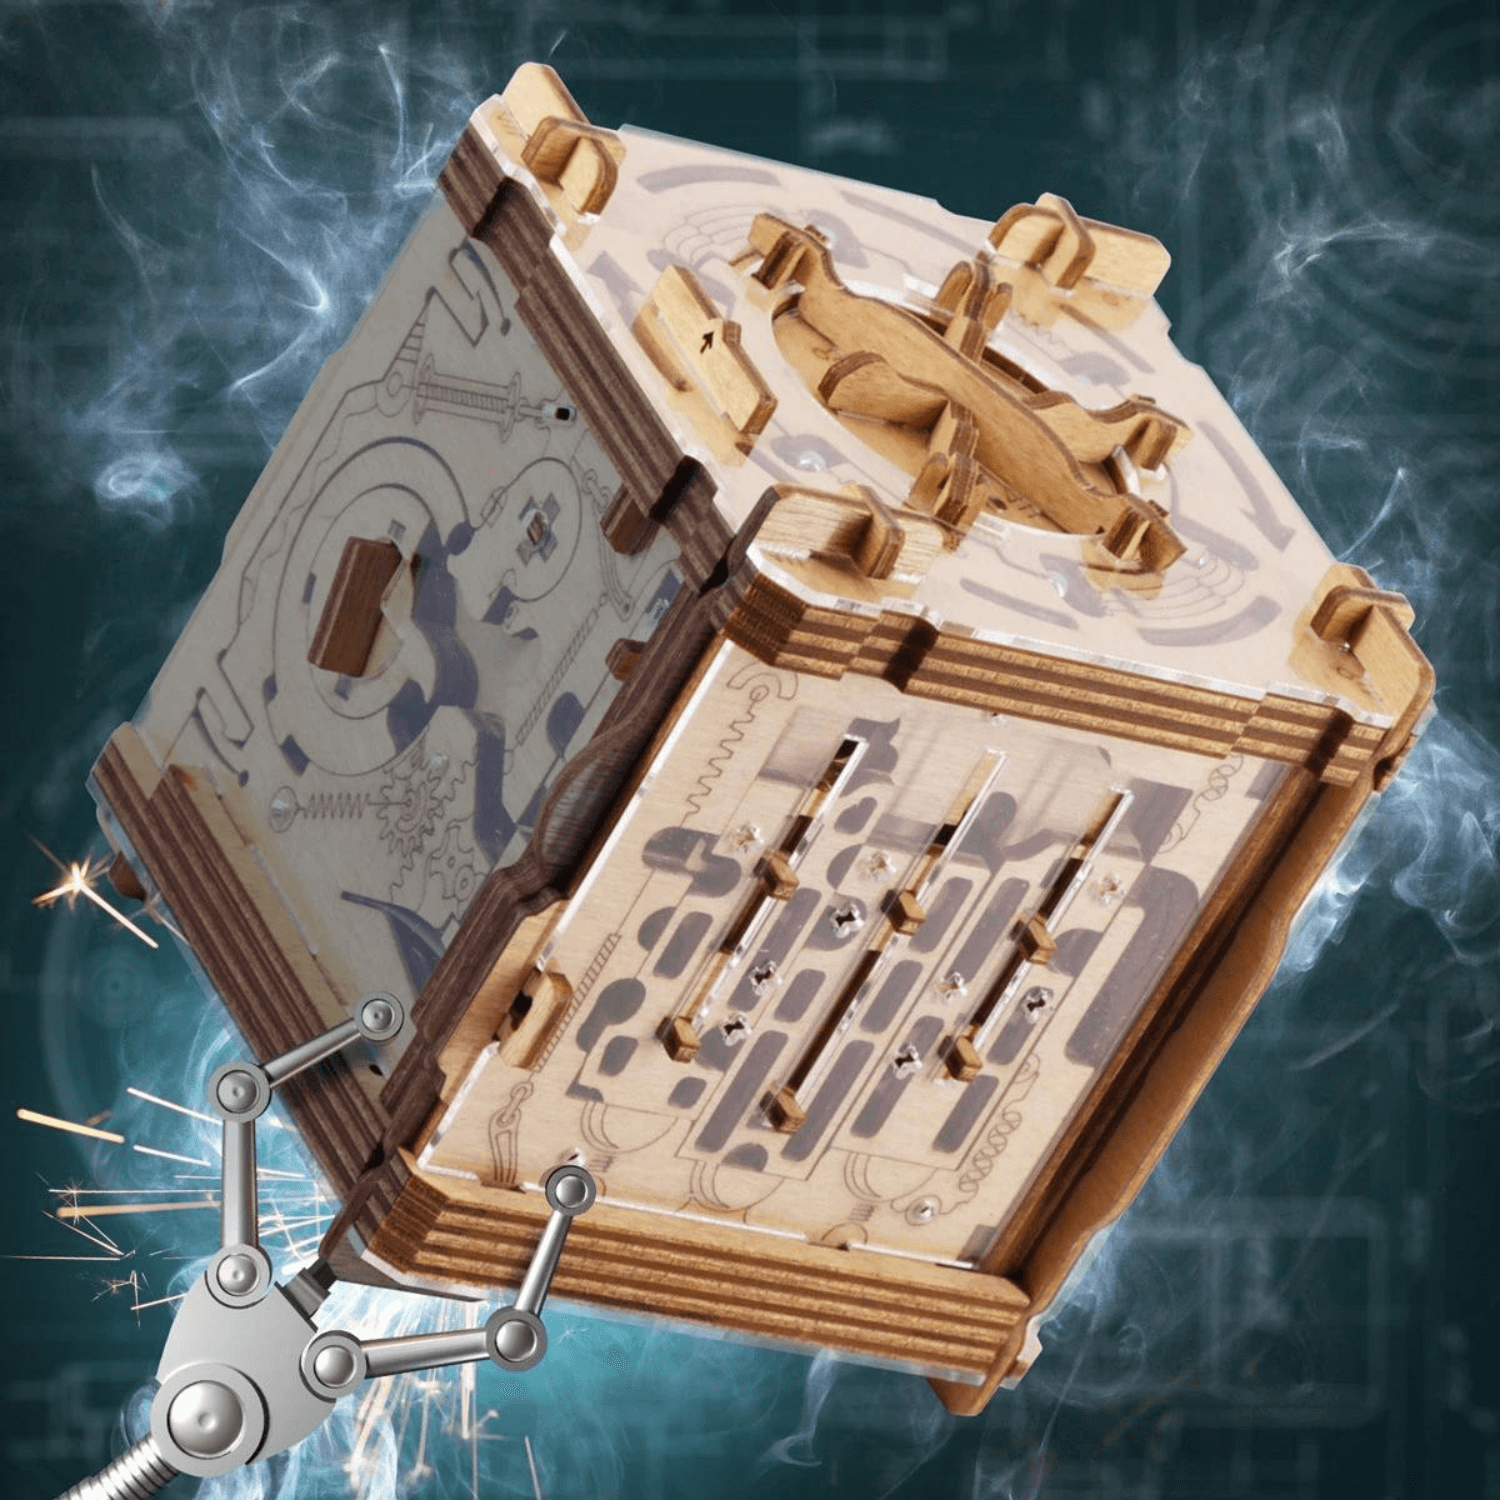 Cluebox "Cambridge Labyrinth"-Escape Room Spiel-iDventure--